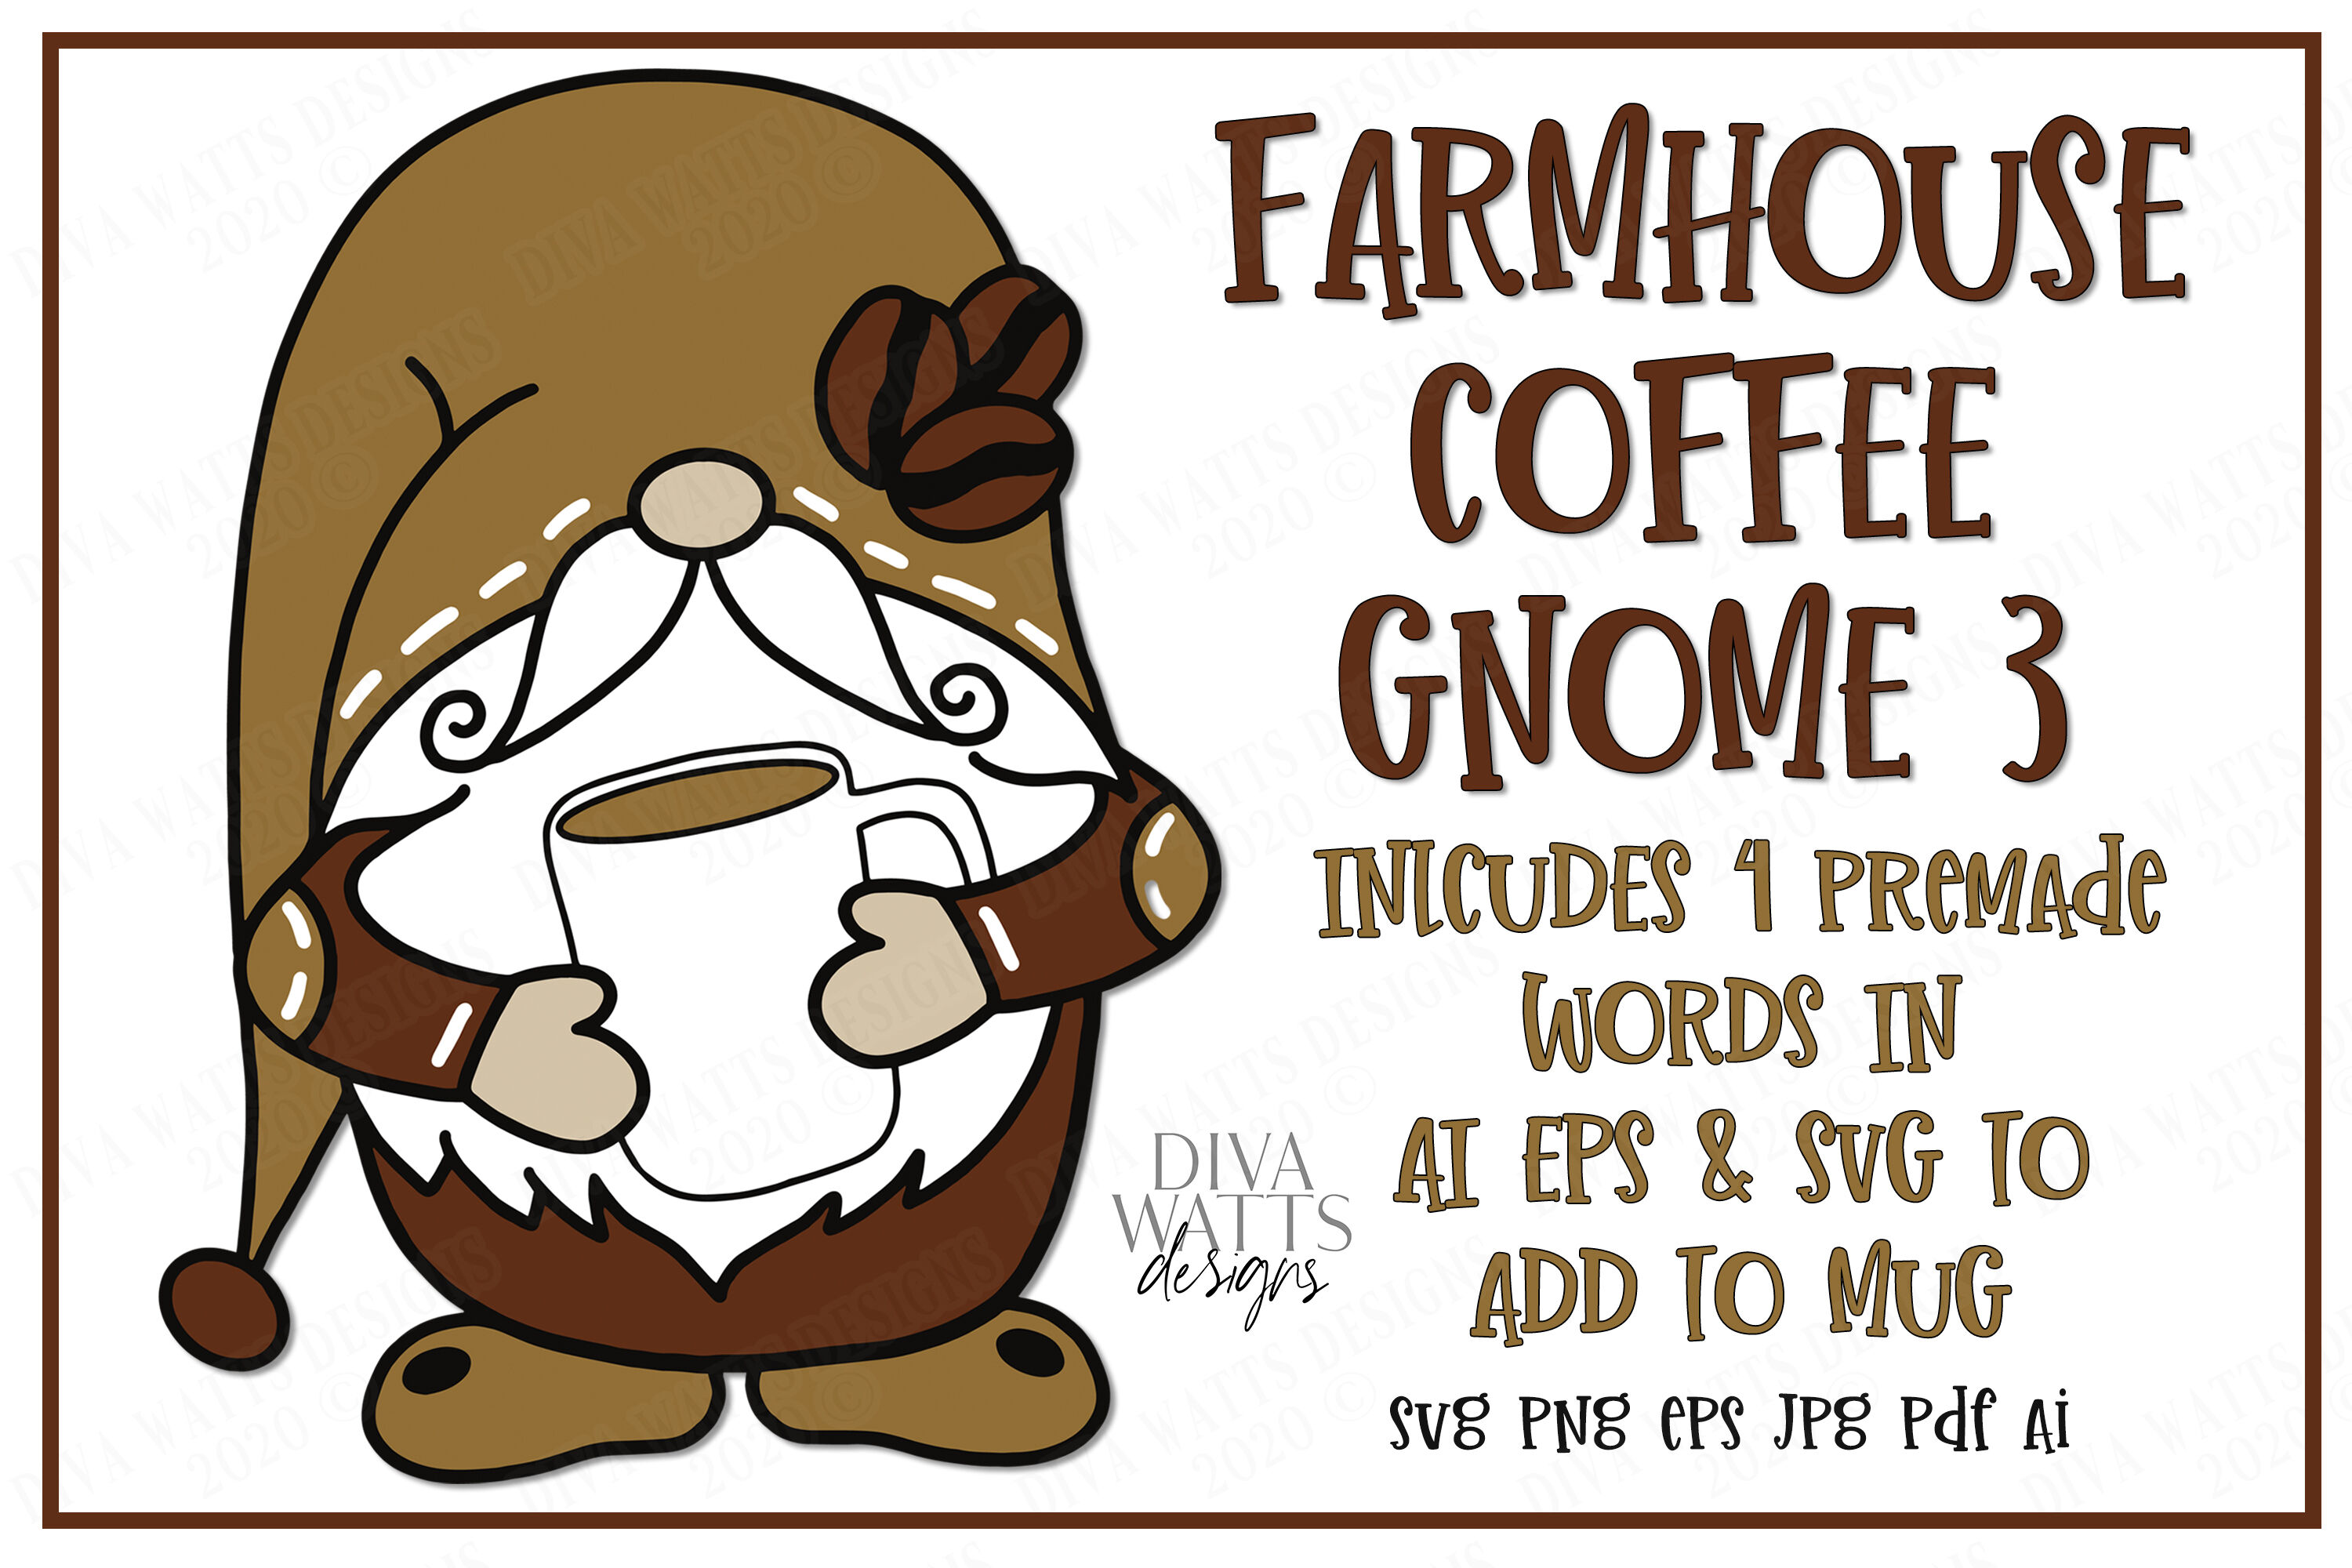 Farmhouse Coffee Gnome With Mug Cutting File Svg Dxf By Diva Watts Designs Thehungryjpeg Com